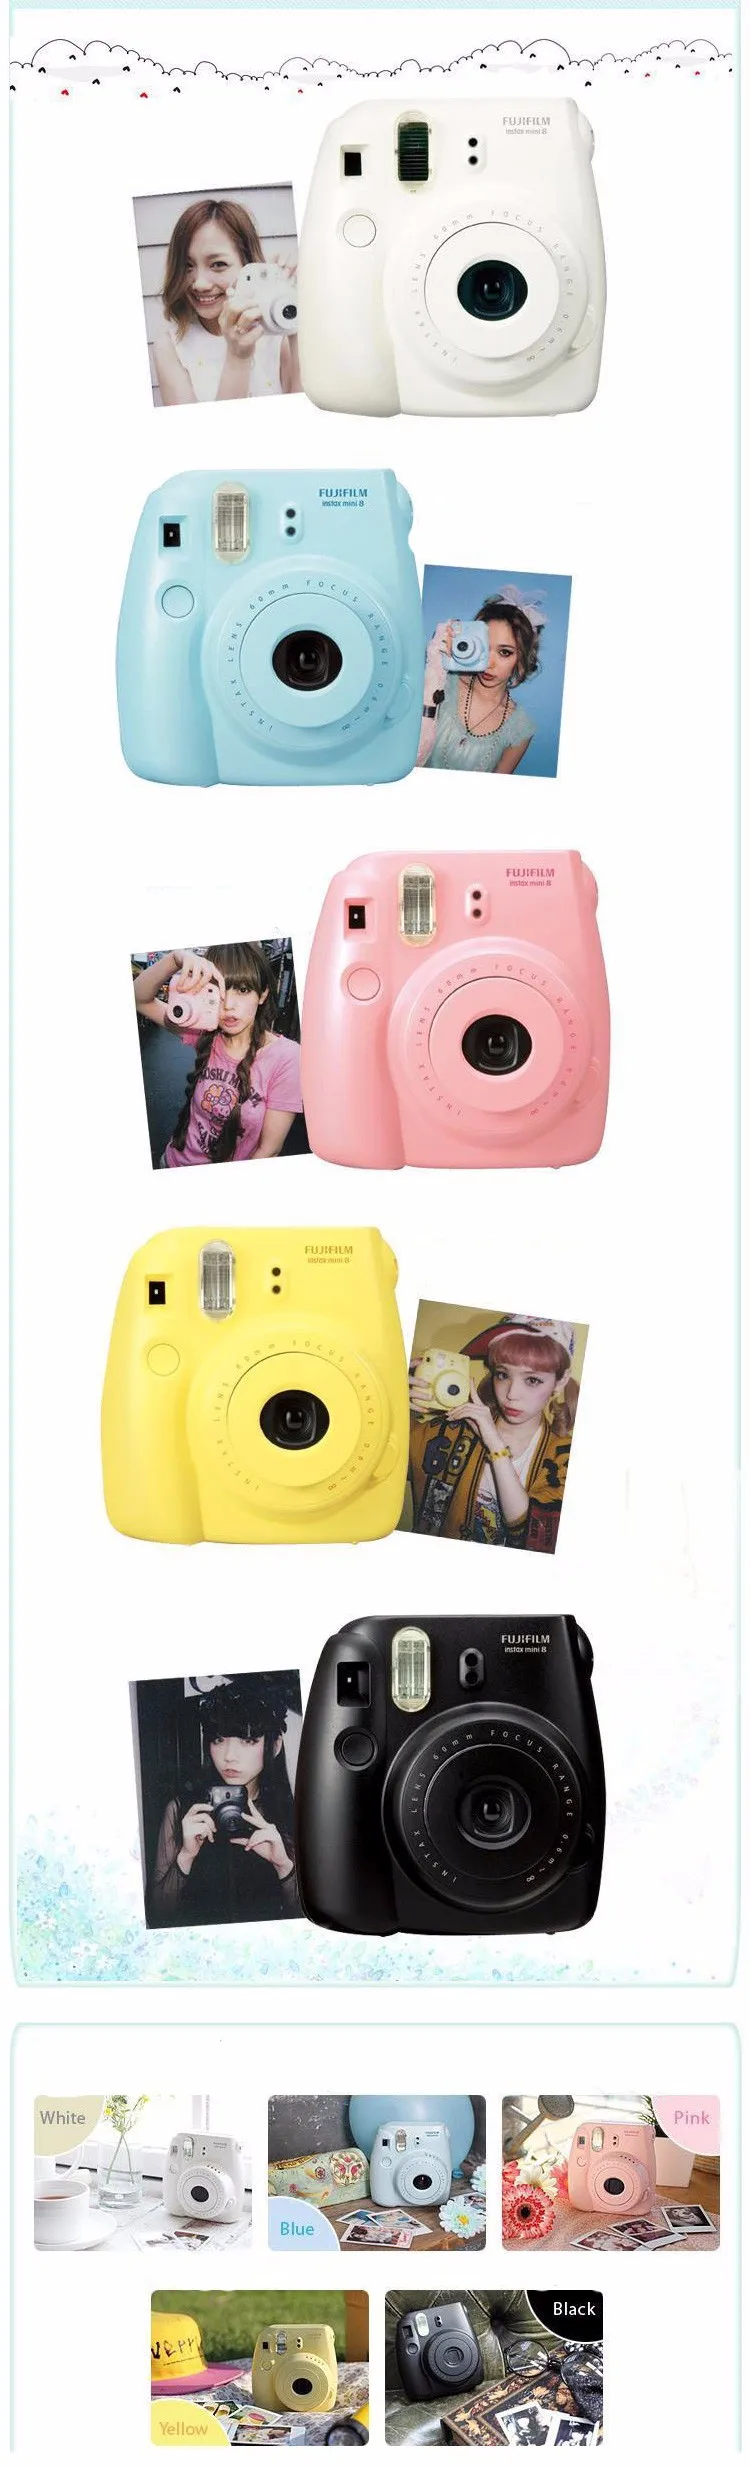 Wholesale Top Selling Fujifilm Instax Mini 8 Film Camera Buy Fujiflm Instax Mini 8 Instax Mini8 Fuji Instax Mini8 Product On Alibaba Com